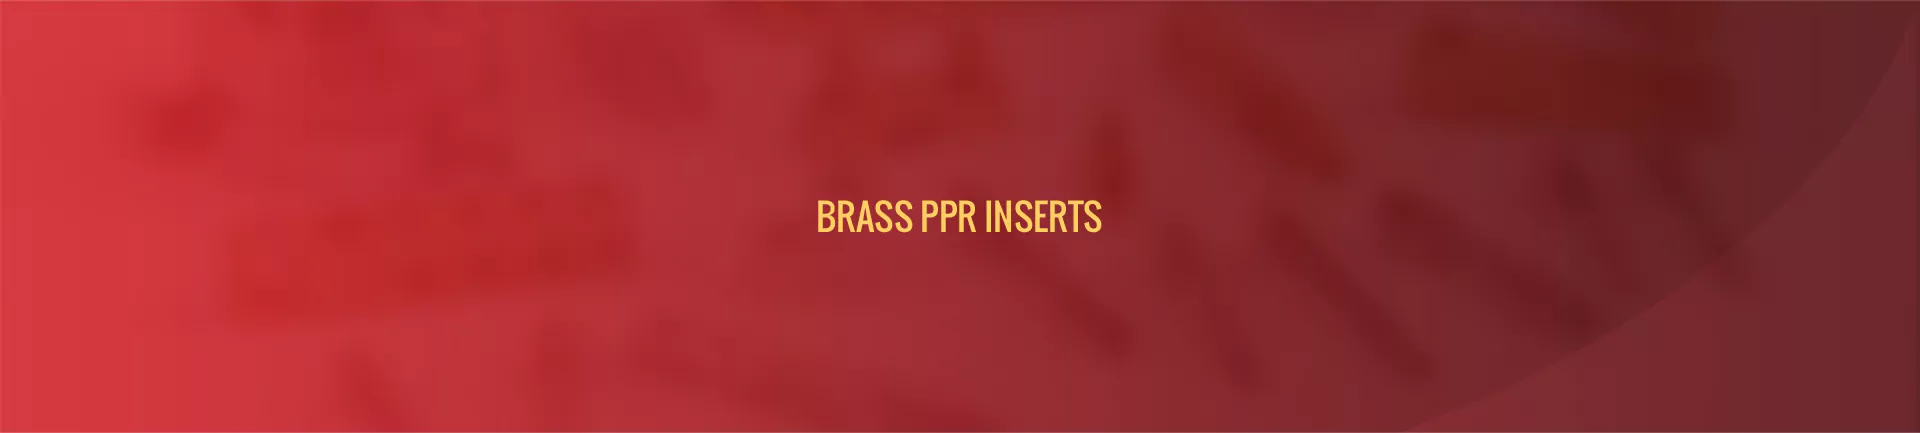 brass-ppr-inserts-banner